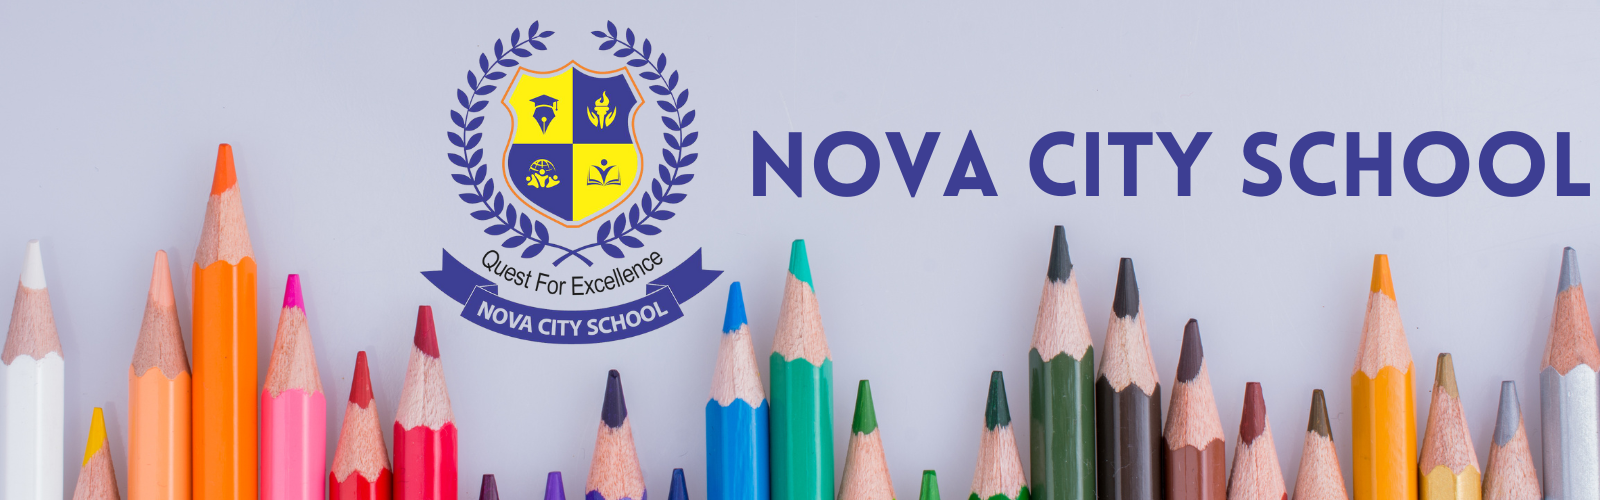 Nova City School